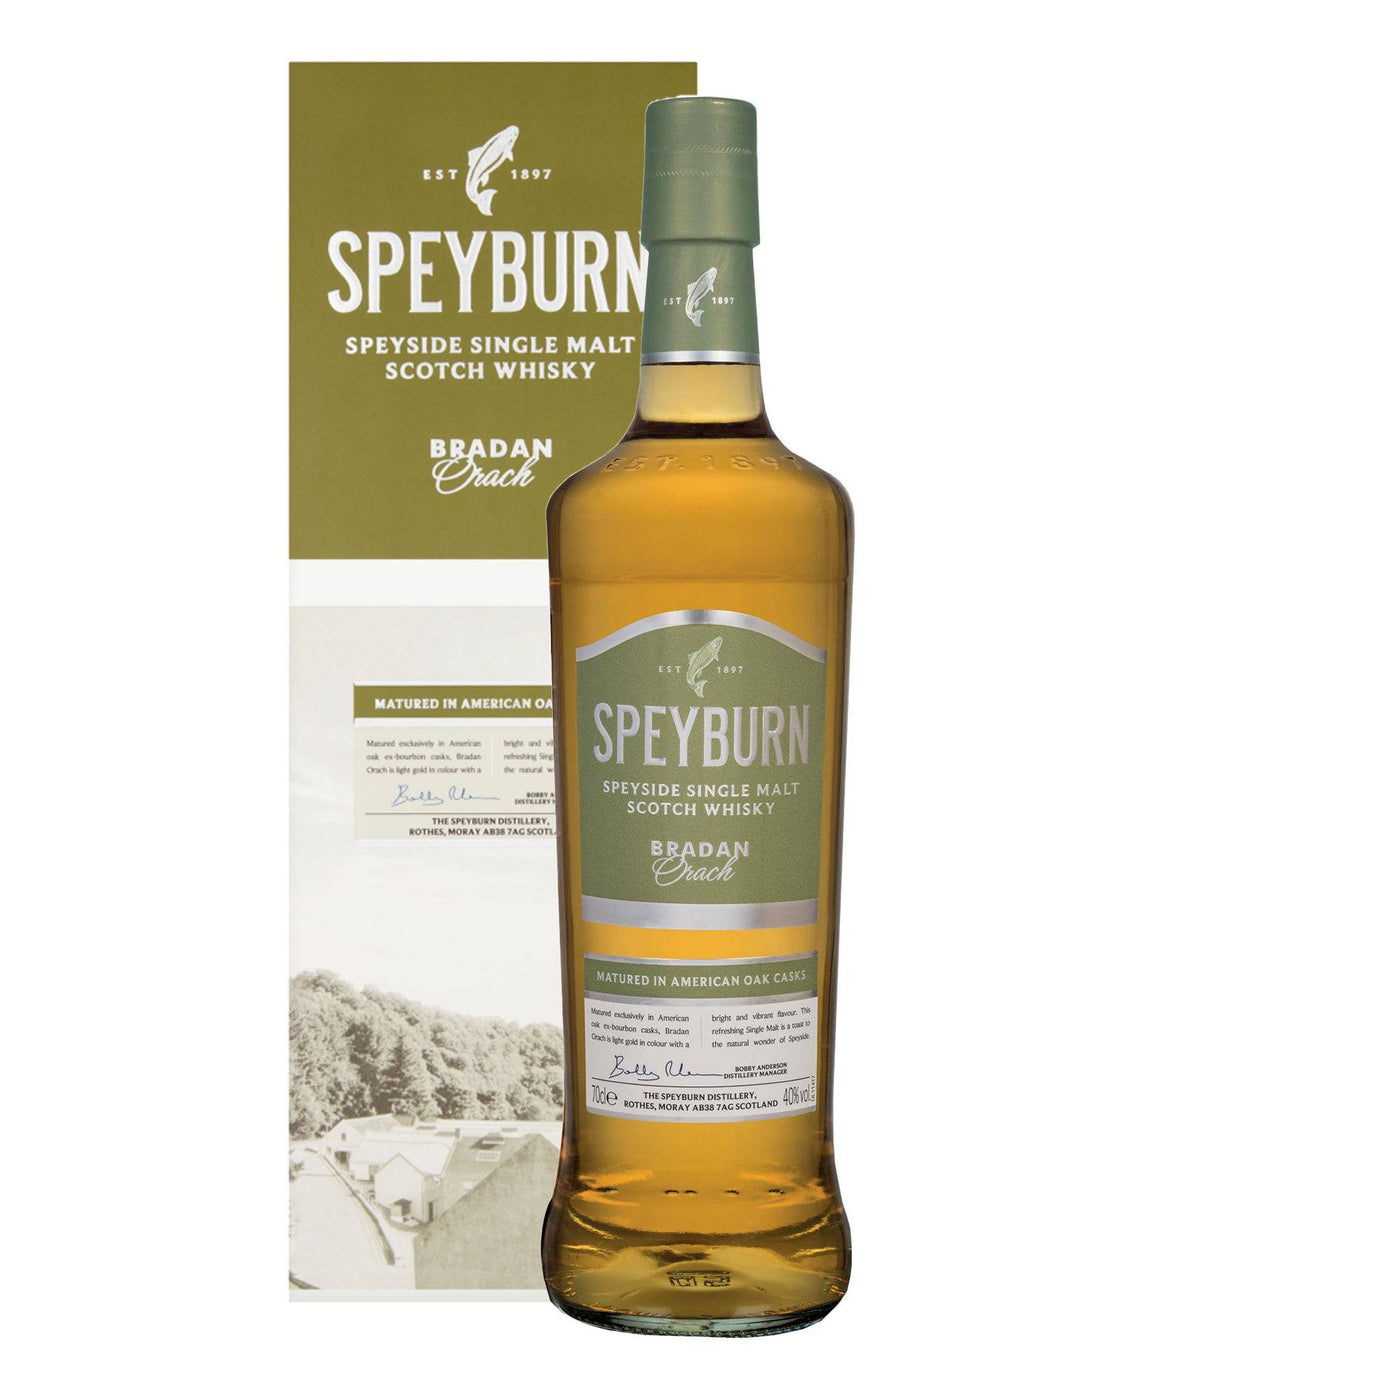 Speyburn Bradan Orach Whisky - Spiritly